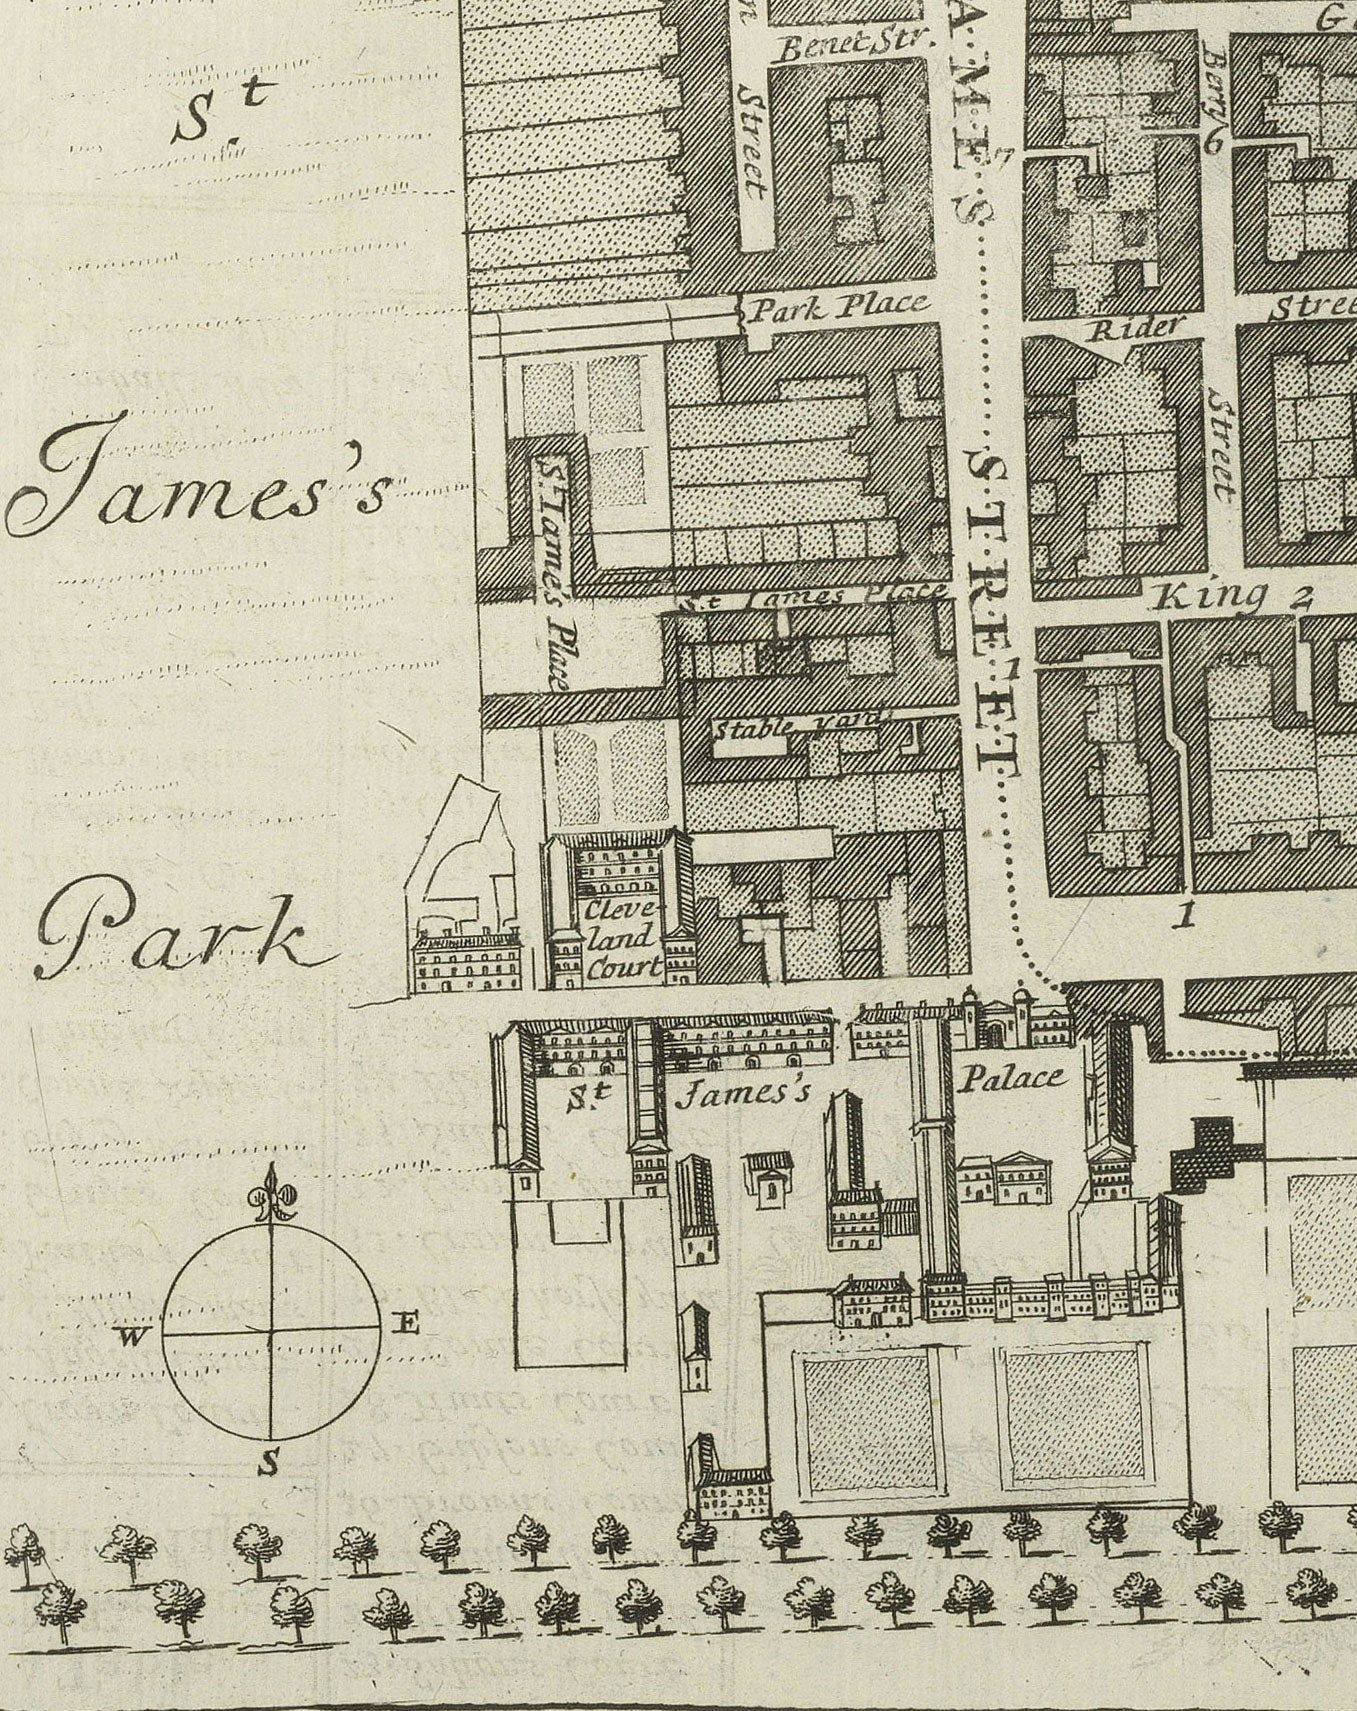 Mapa antiguo de la parroquia de St James, 1720 por Strype y Stow - Londres, Piccadilly, St James's Square, Pall Mall, Westminster